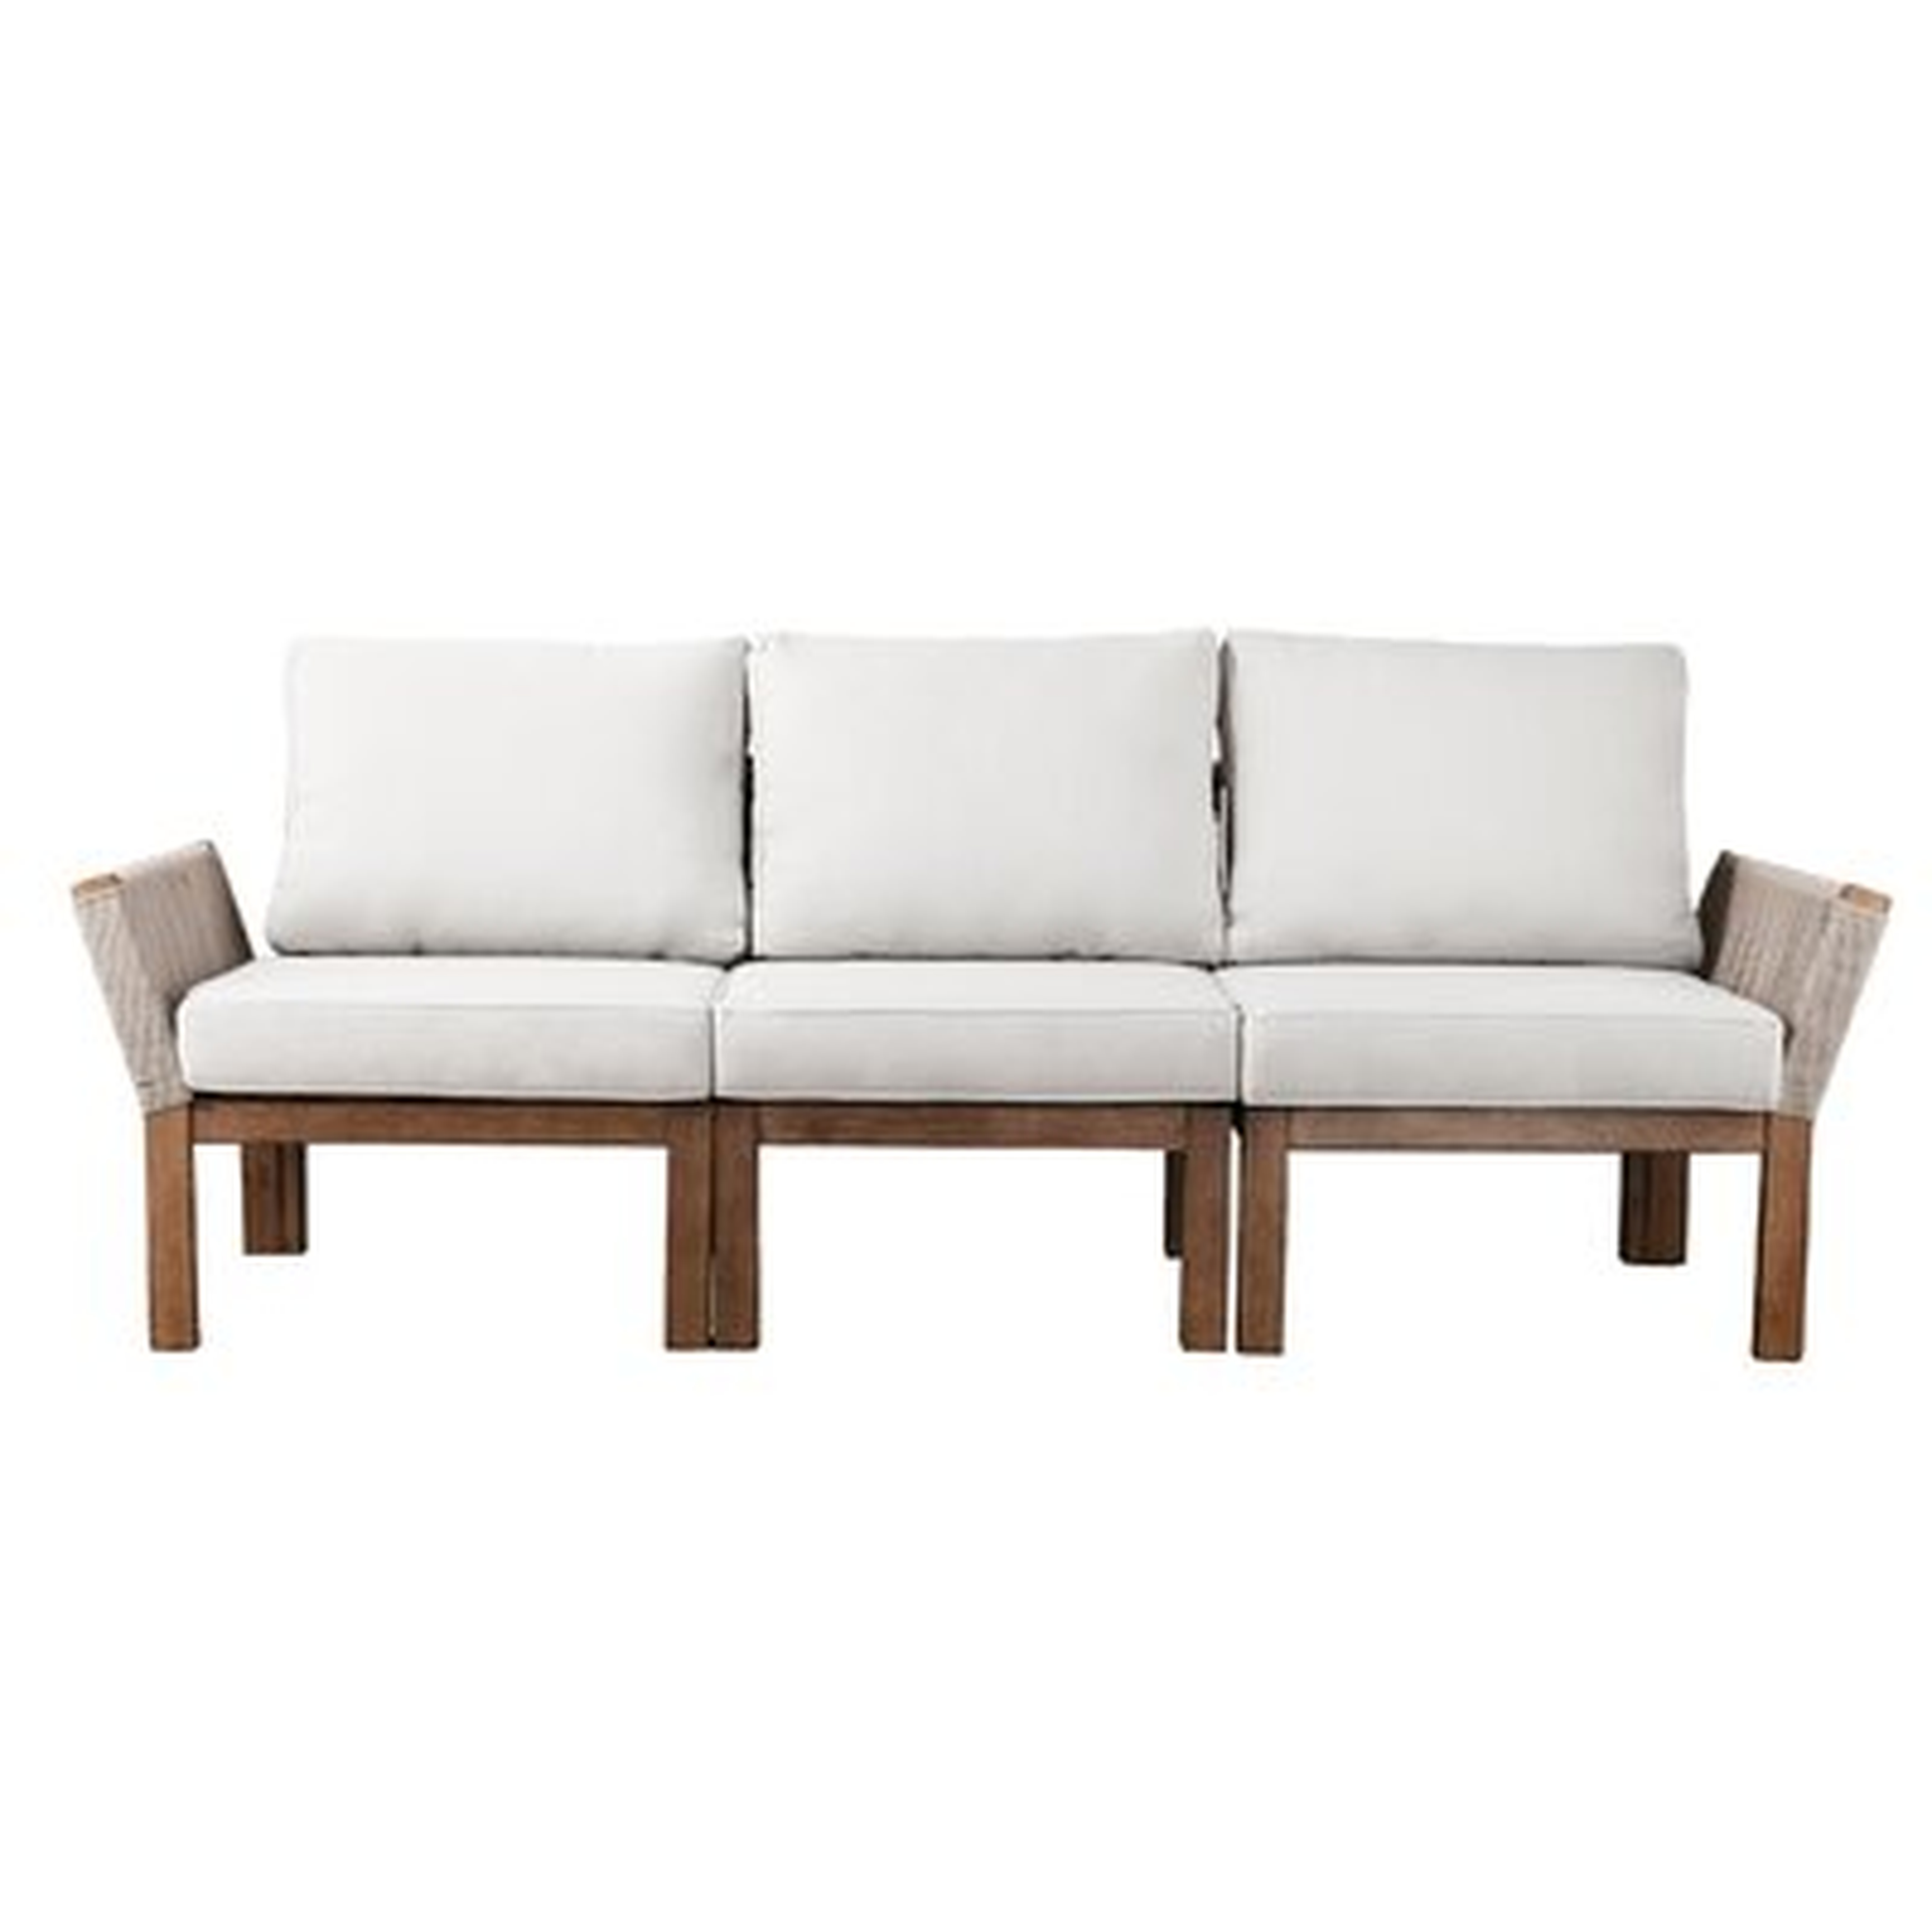 Brendina Patio Sofa with Cushions - Wayfair